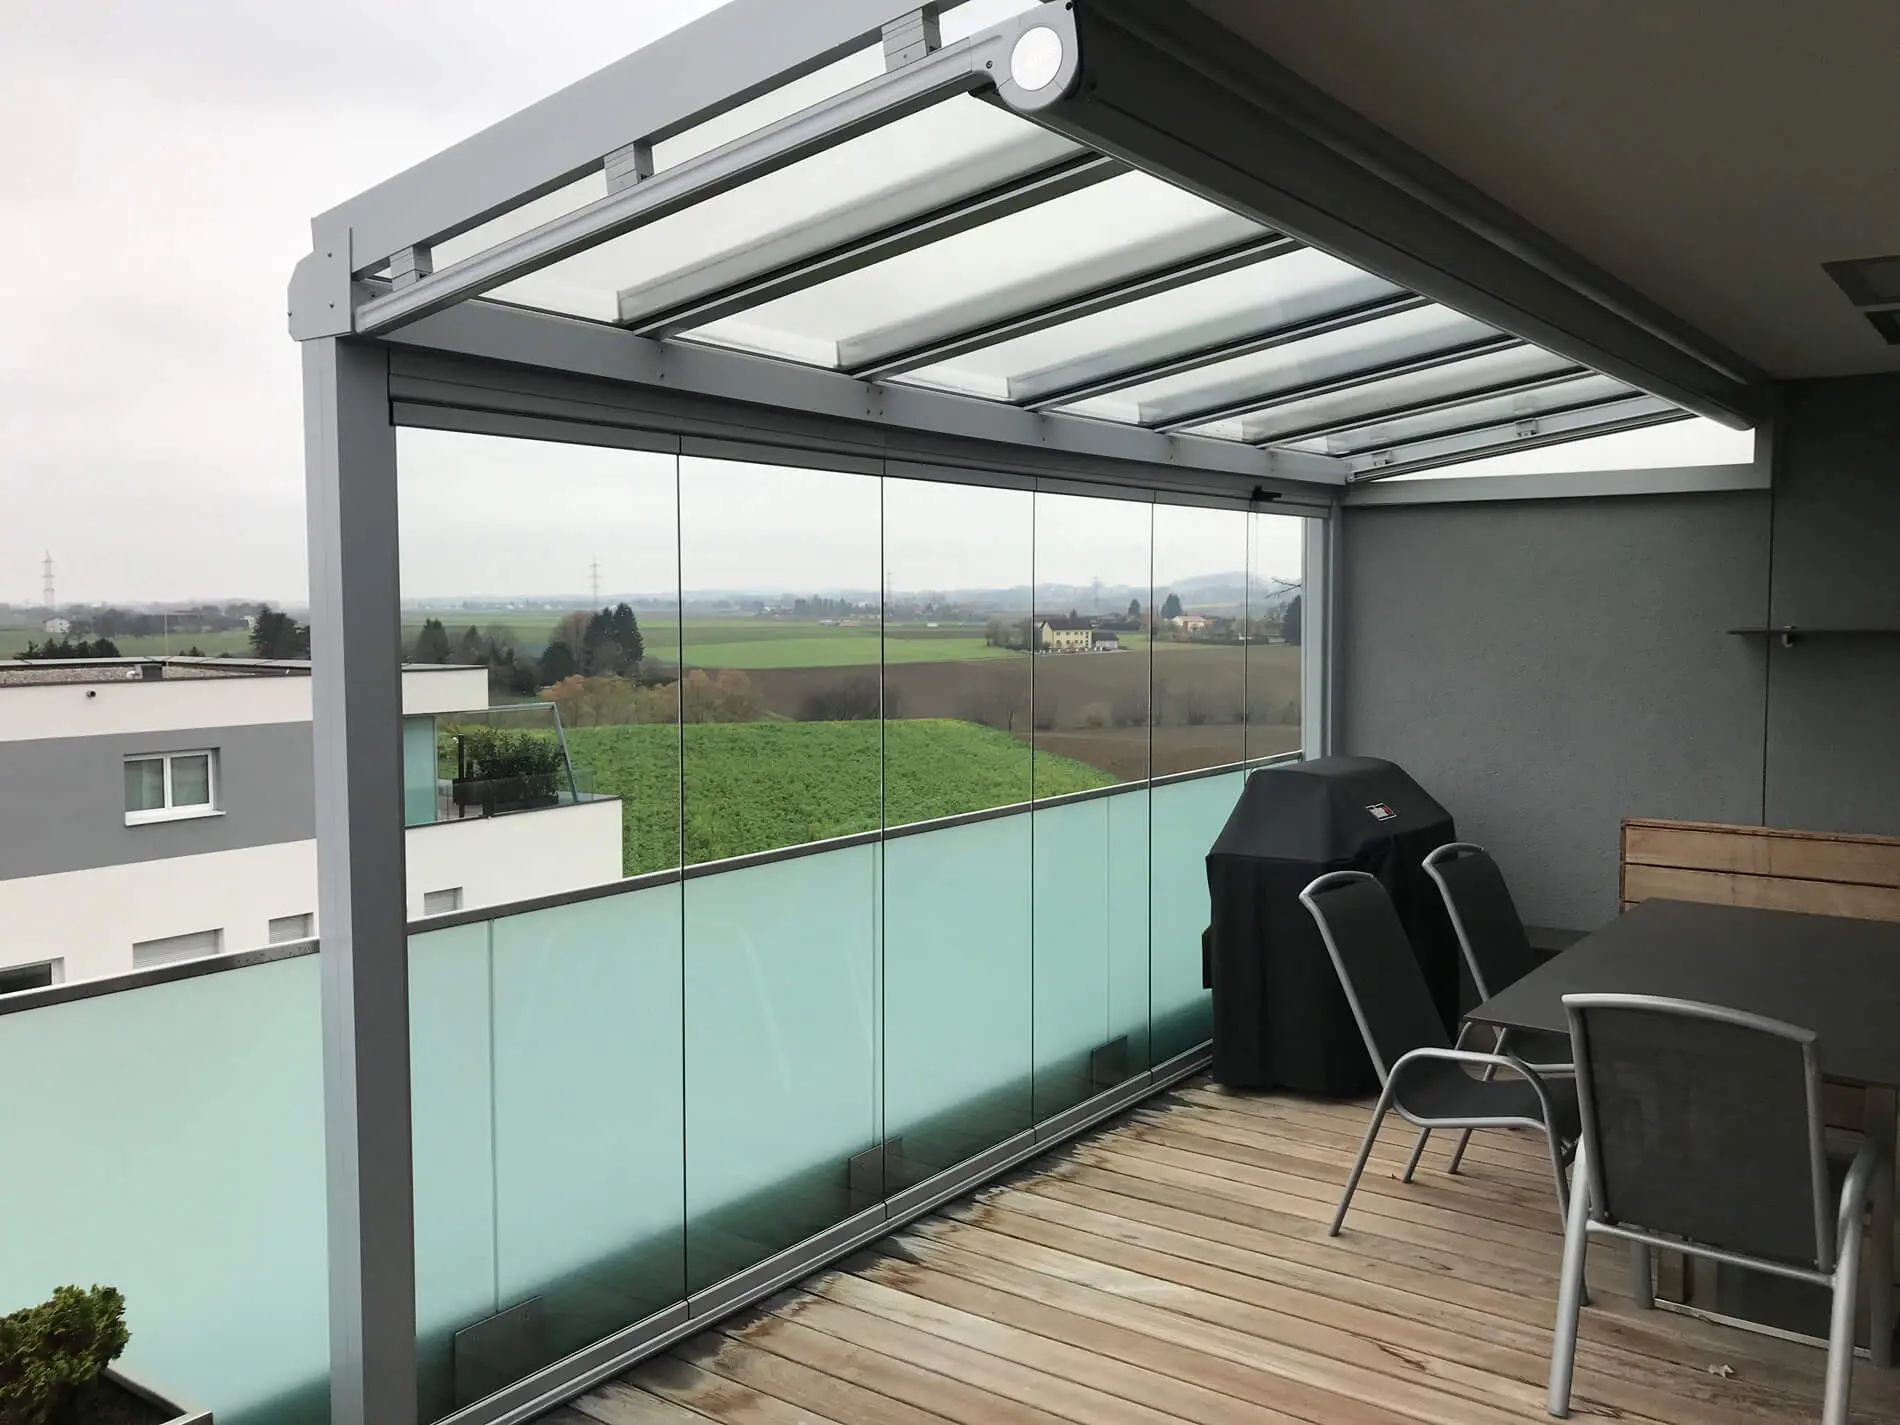 Aluminium-Terrassenüberdachung auf Balkon montiert